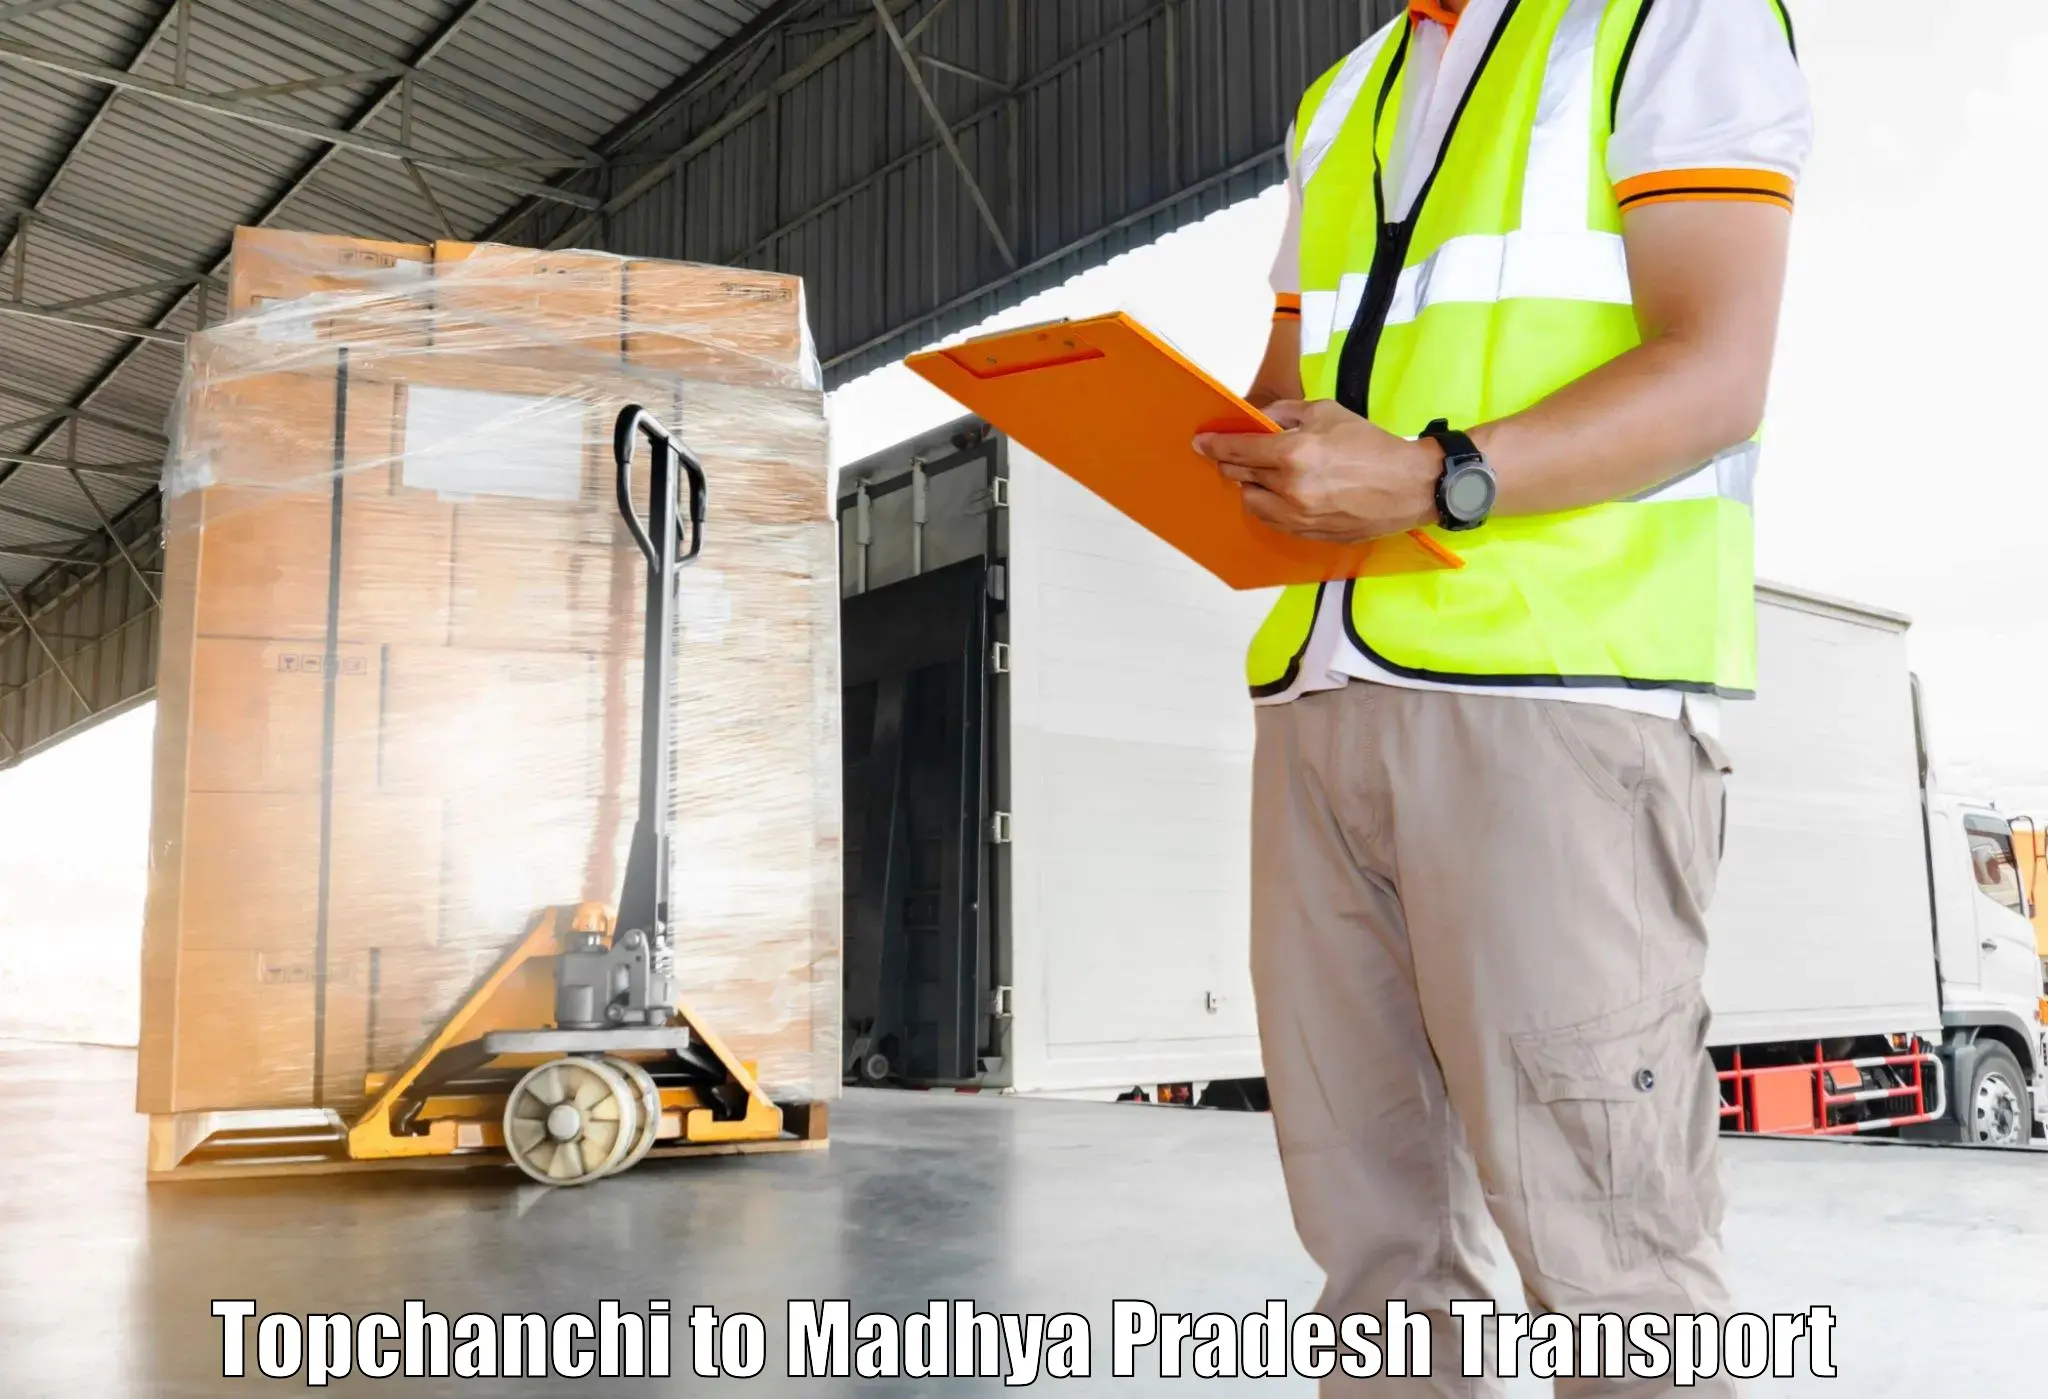 Commercial transport service Topchanchi to Madhya Pradesh